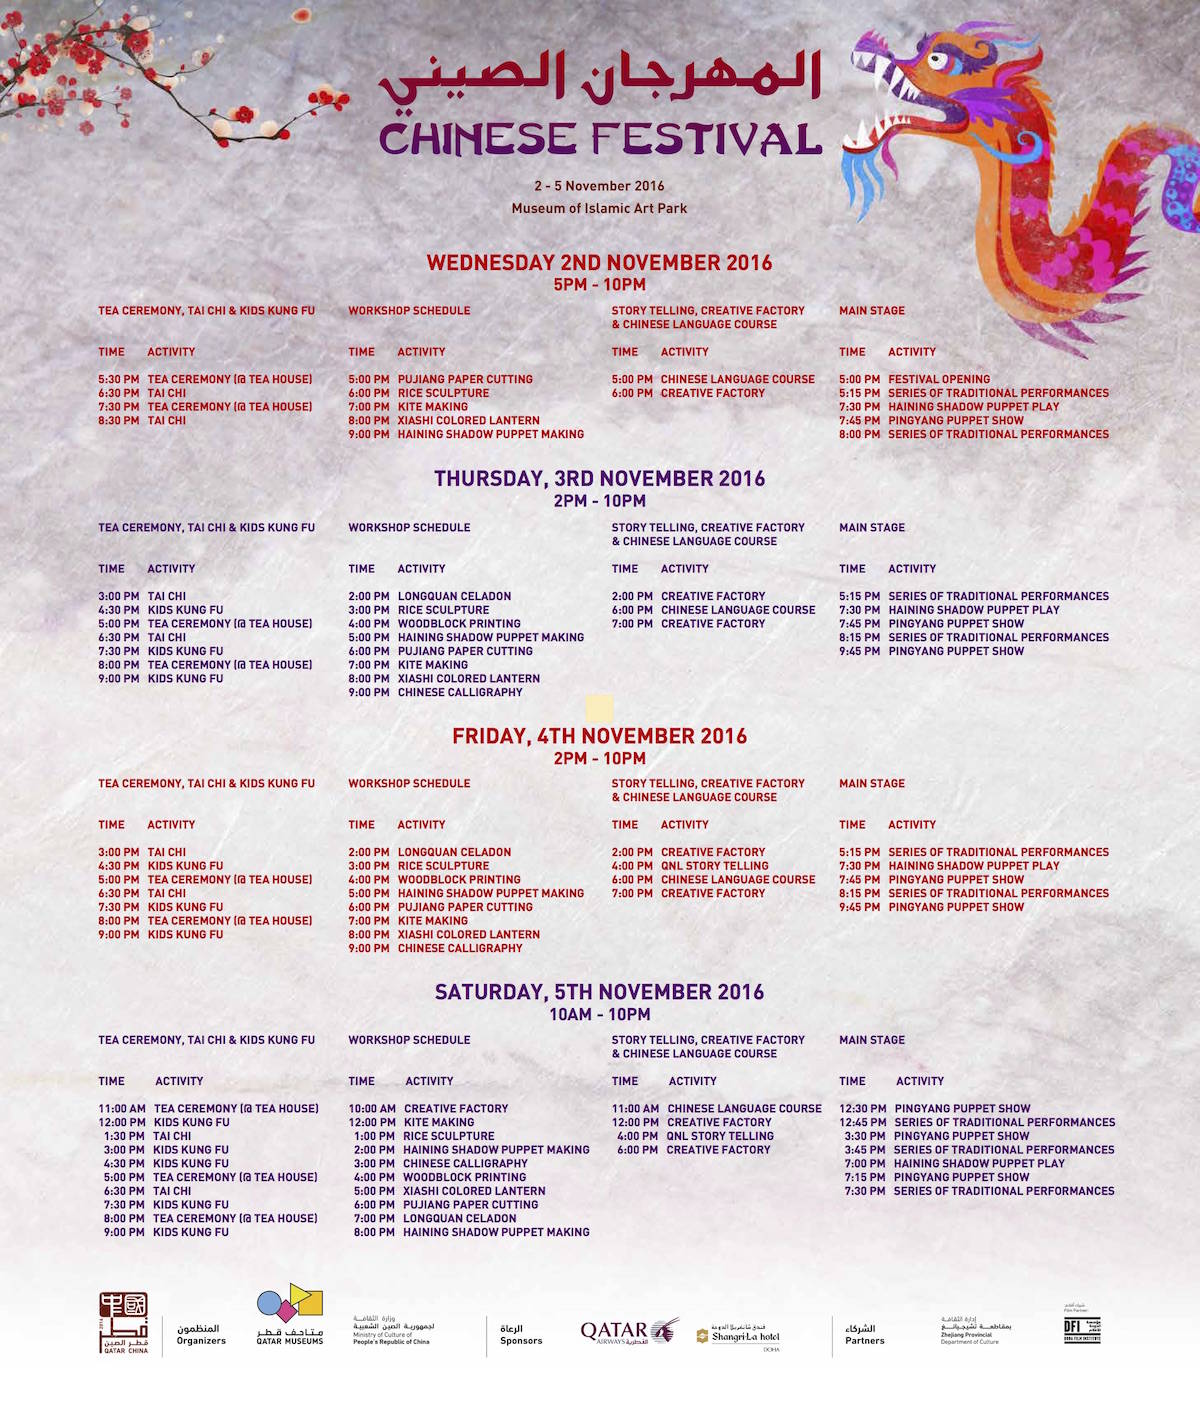 chinese-festival-mia-park-doha-qatar-event-schedule